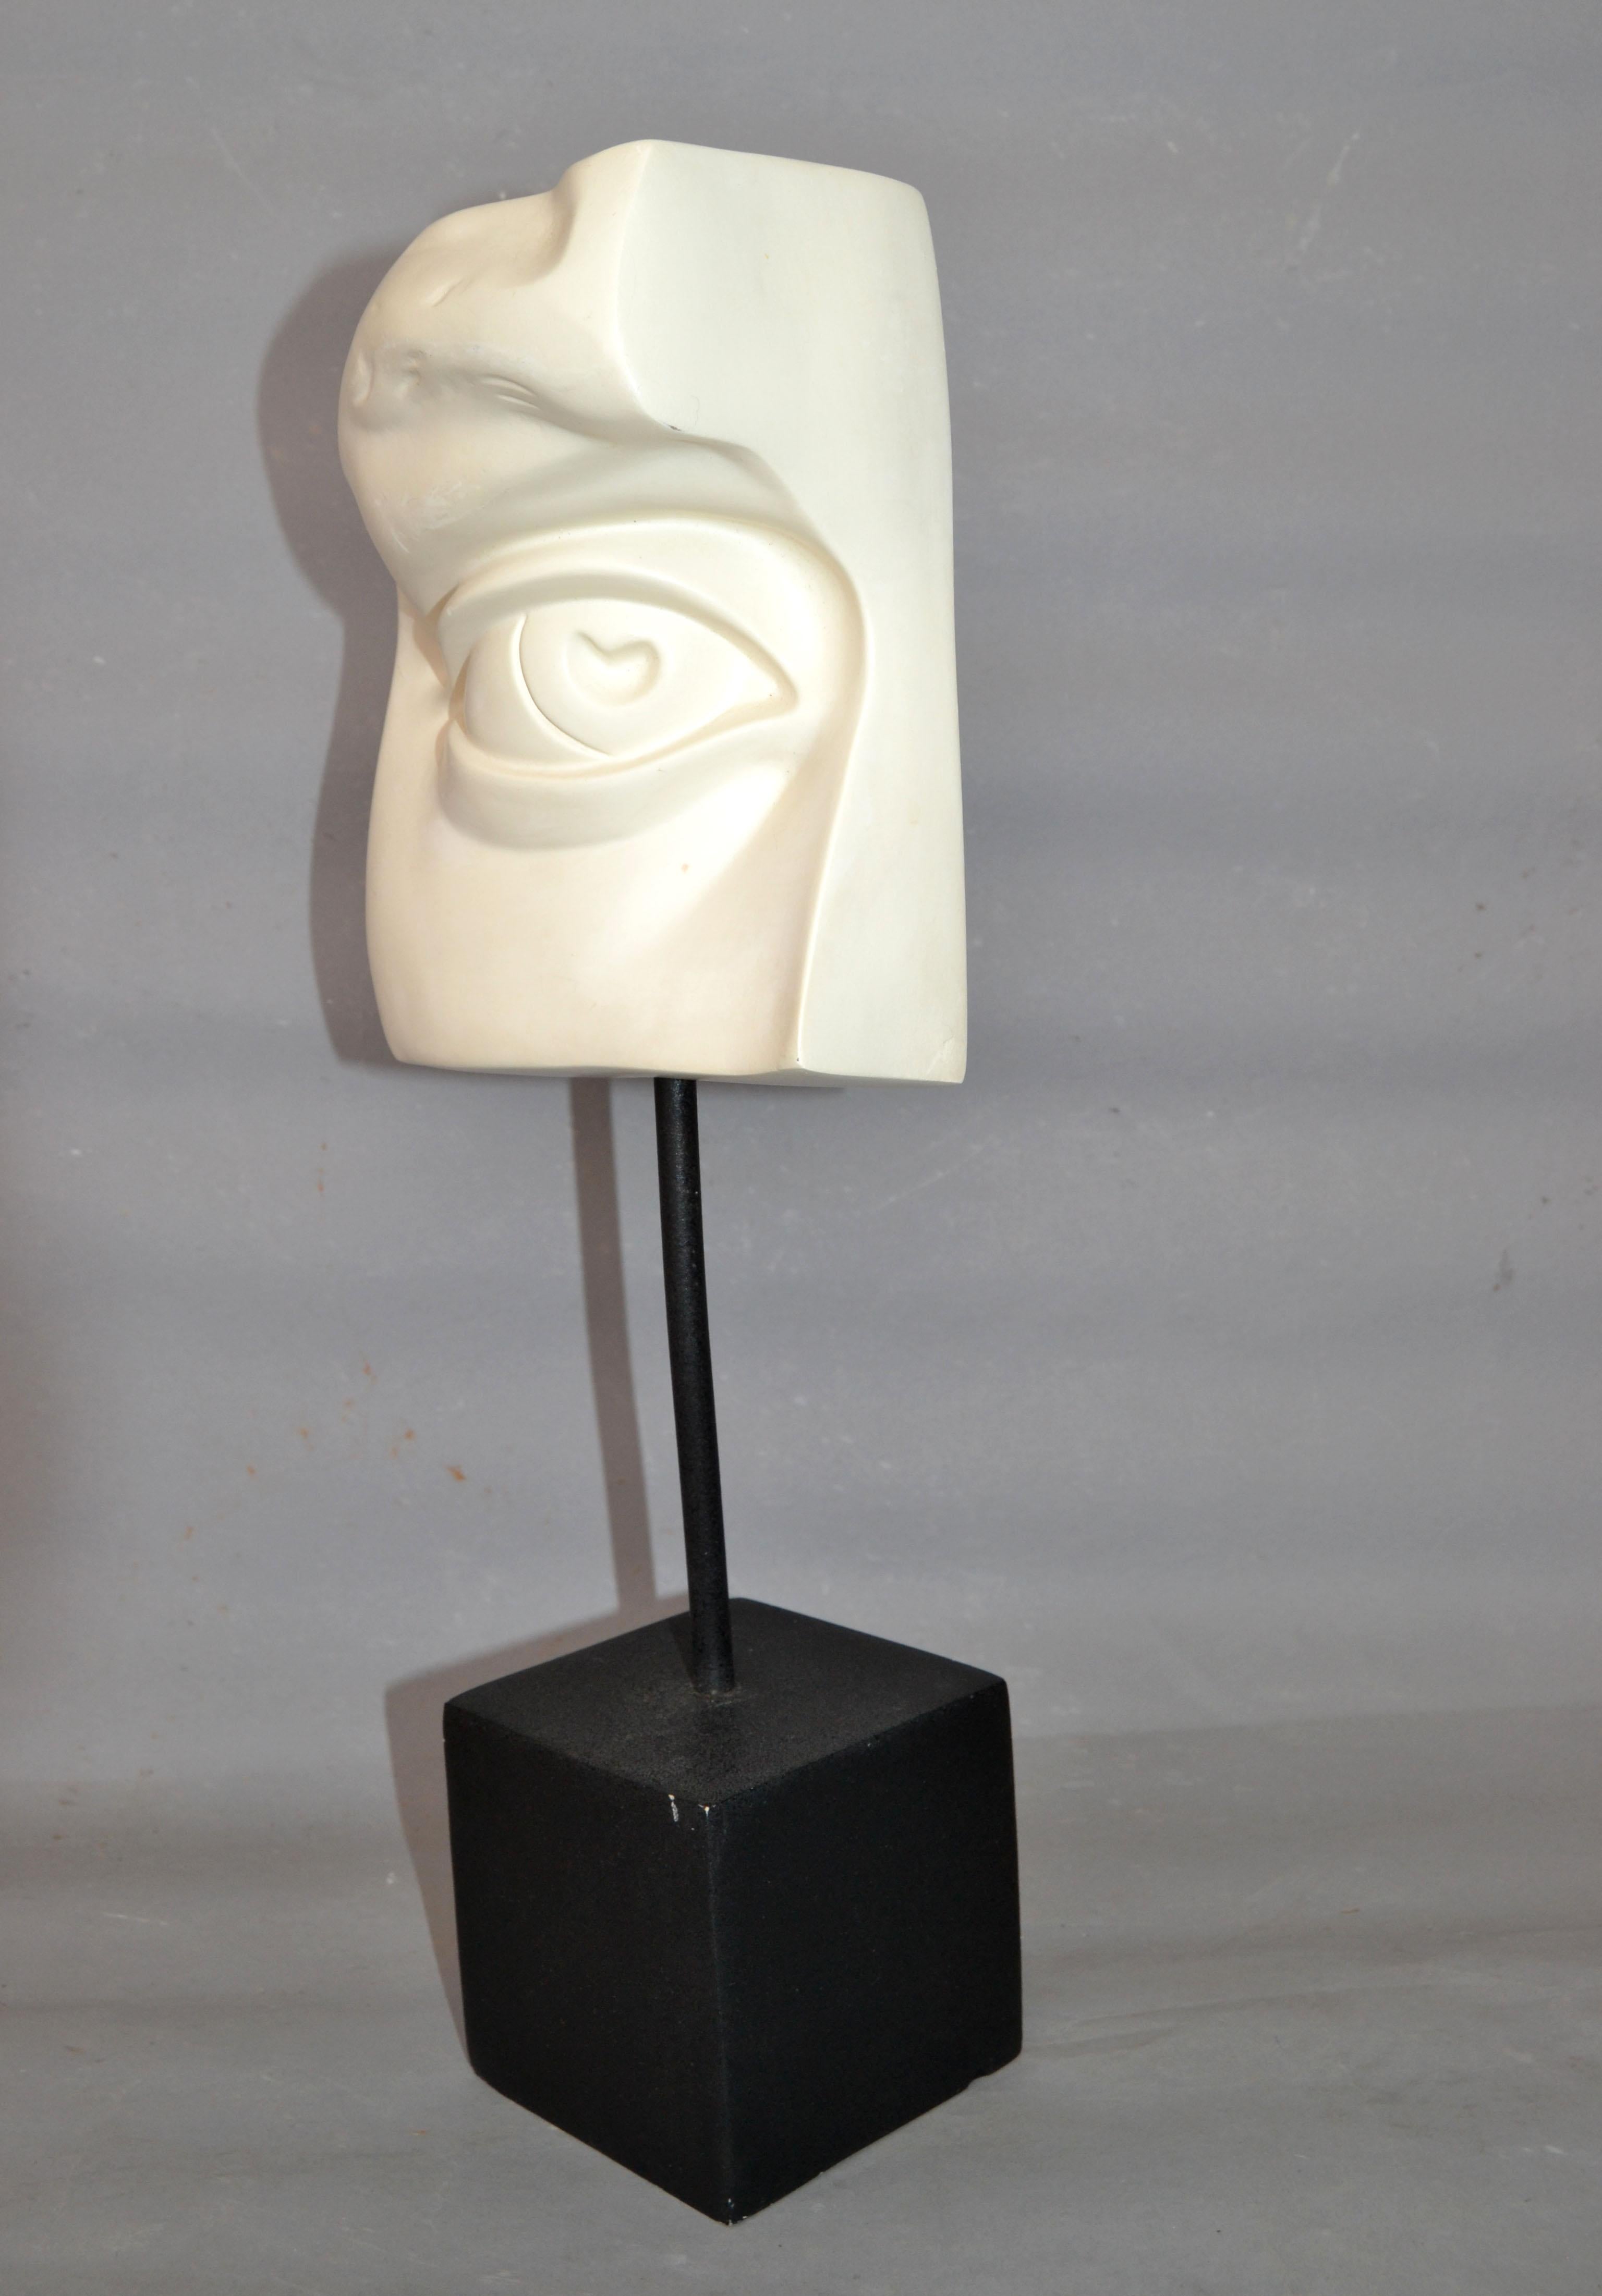 Missing eye of David black & white sculpture plaster on wood Mid-Century Modern.